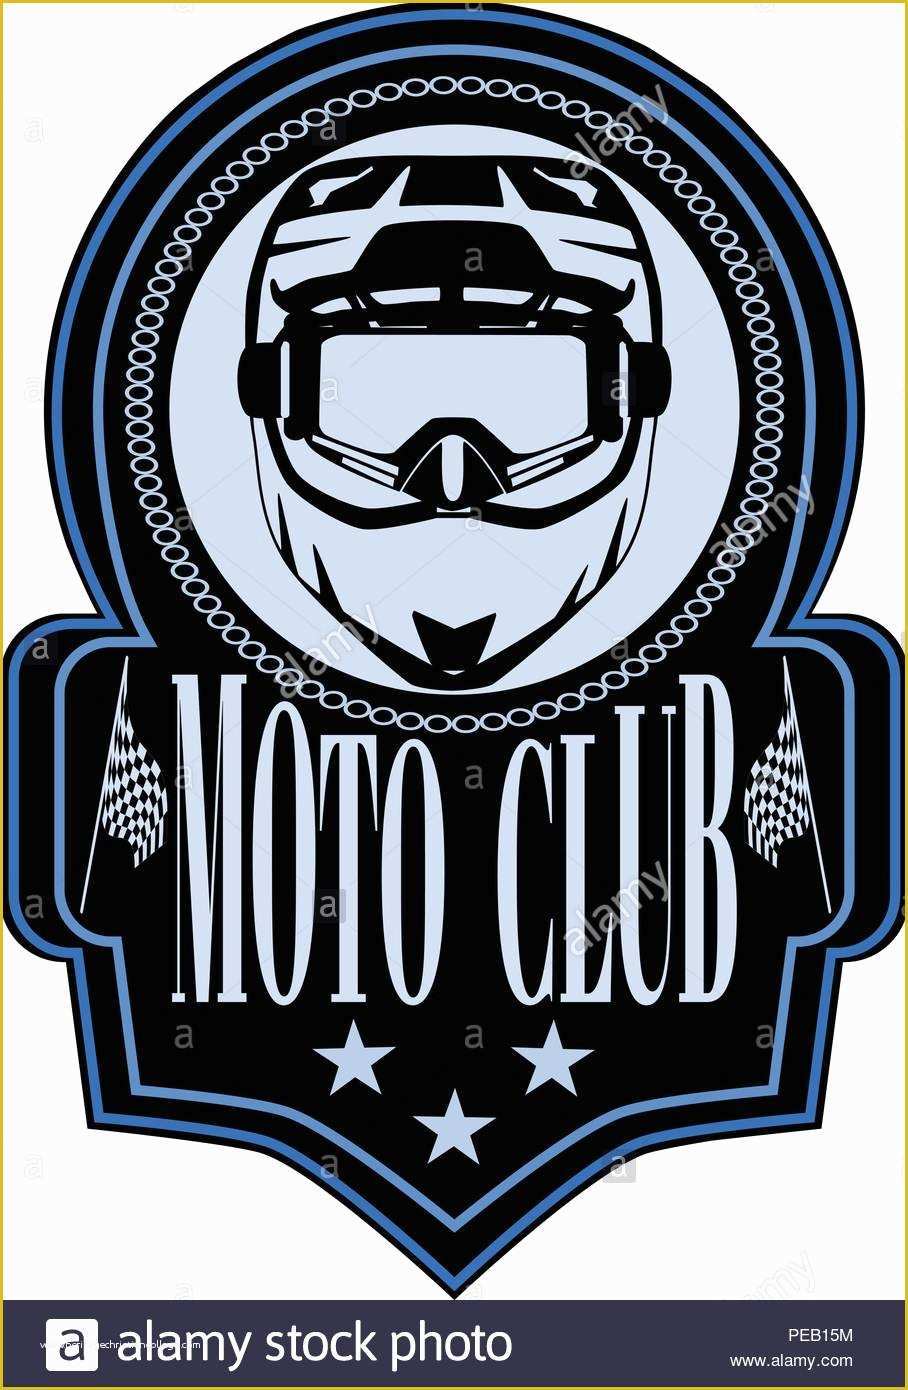 Motorcycle Club Logo Template Free Of Biker Club Stock S And Biker Club